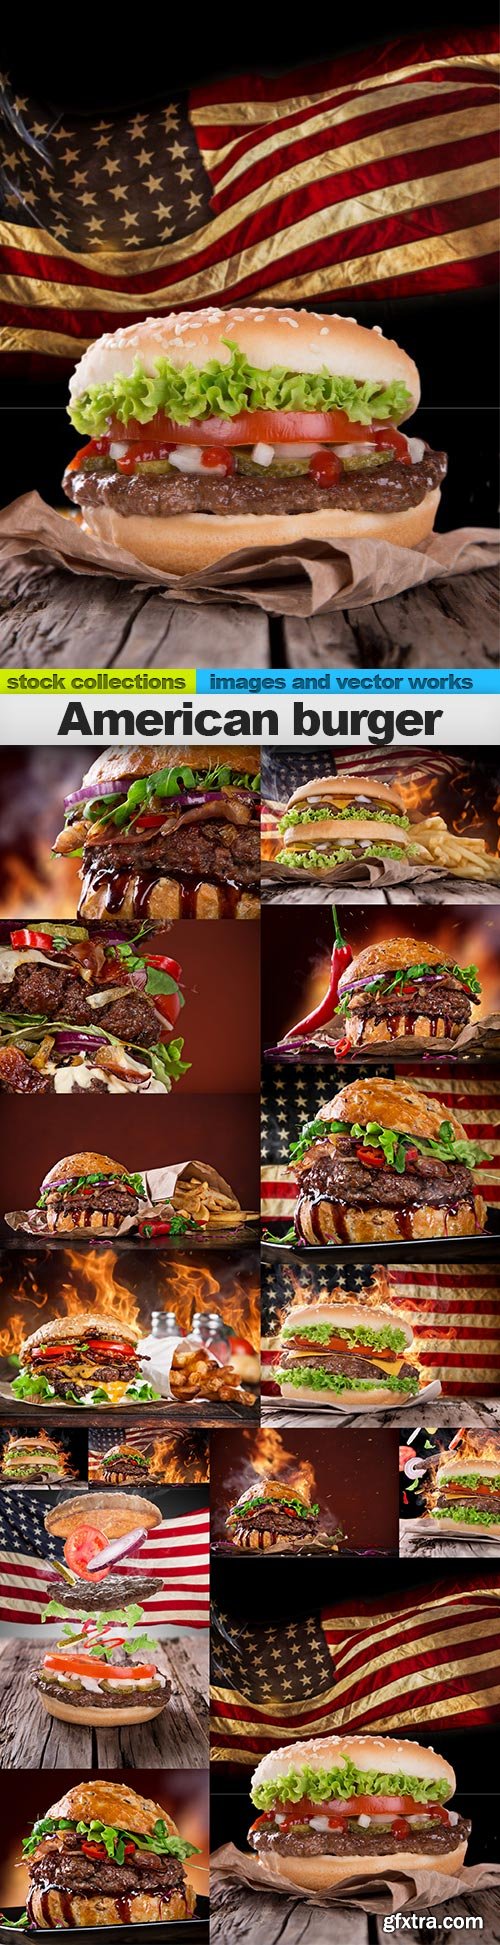 American burger, 15 x UHQ JPEG